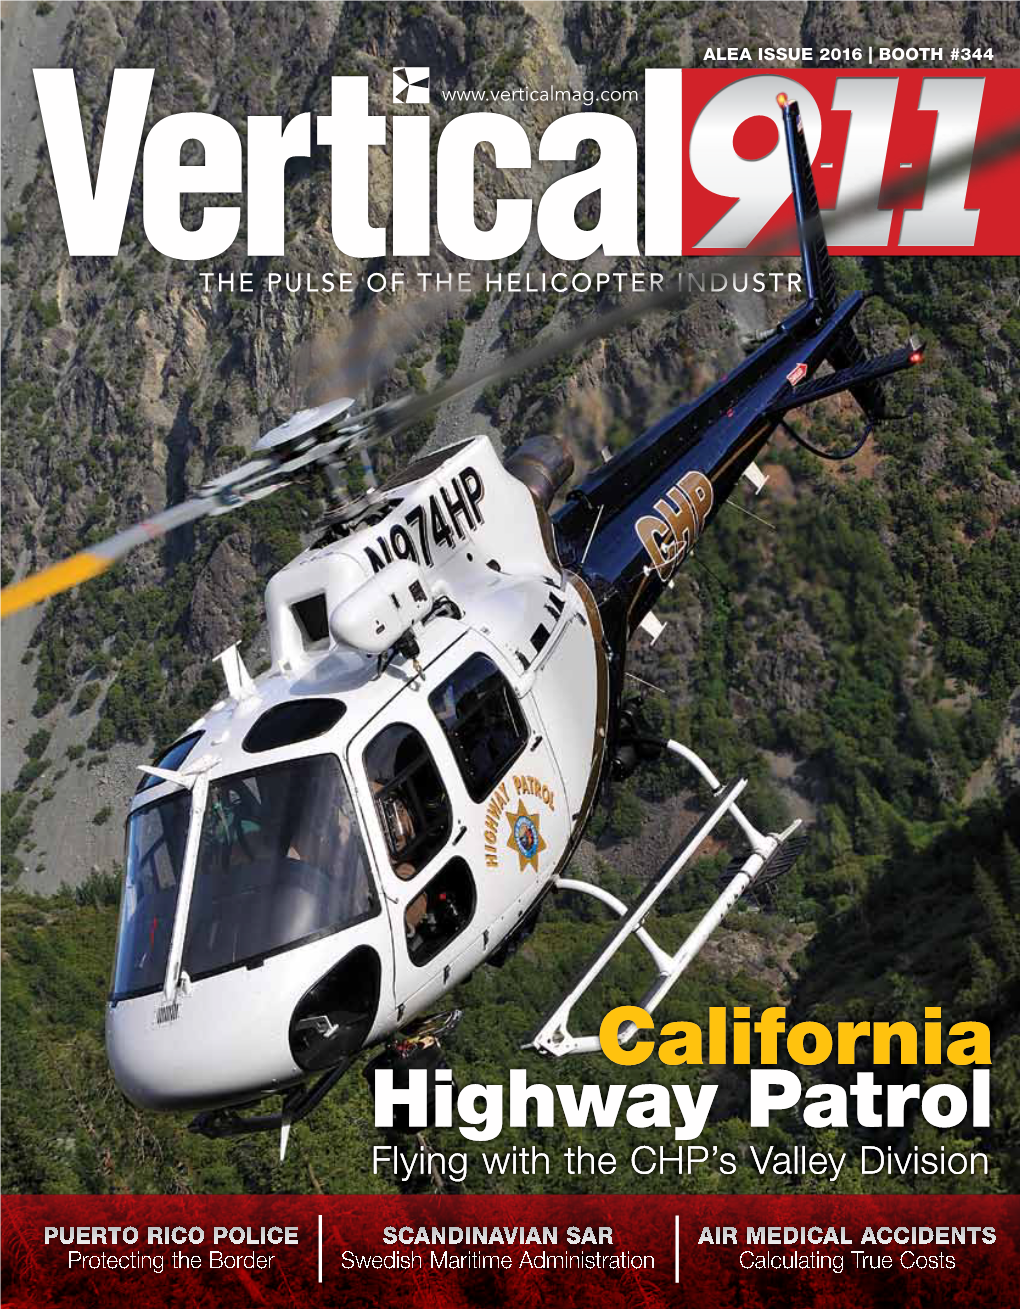 Vertical 911 Magazine RIGOROUS TESTING